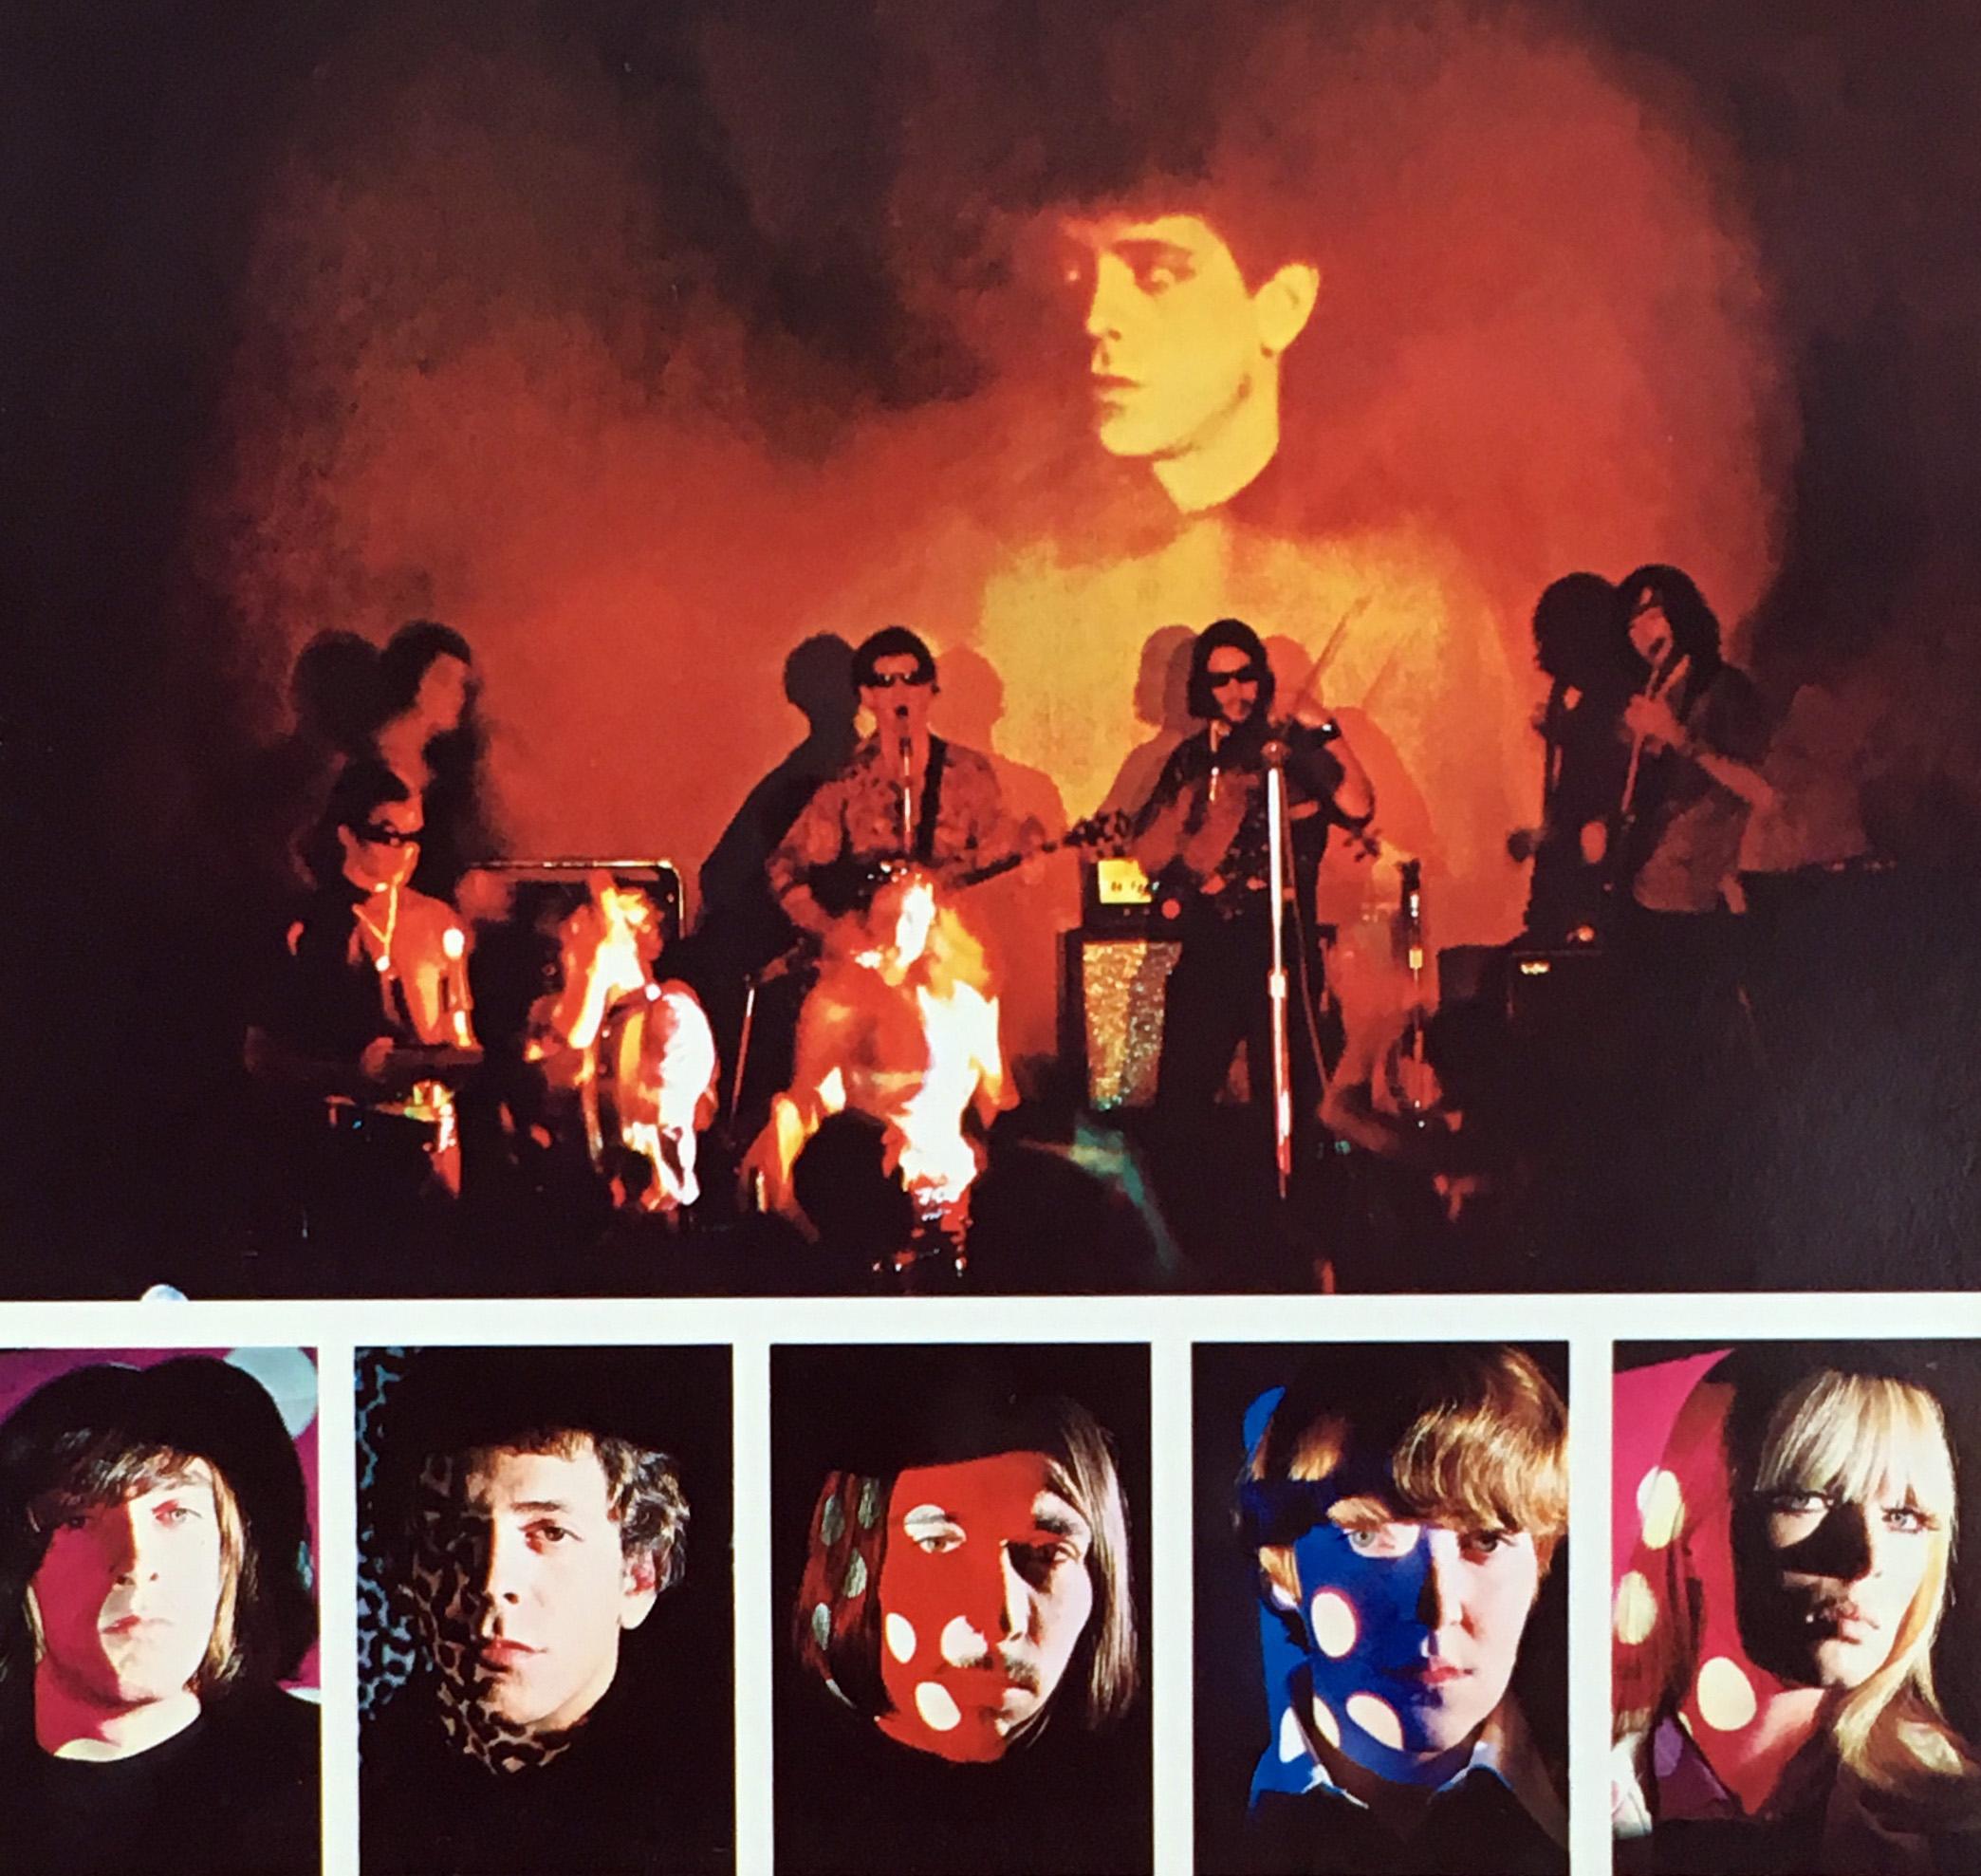 Warhol Banana Cover: Nico & The Velvet Underground Vinyl Record - Pop Art Art by Andy Warhol